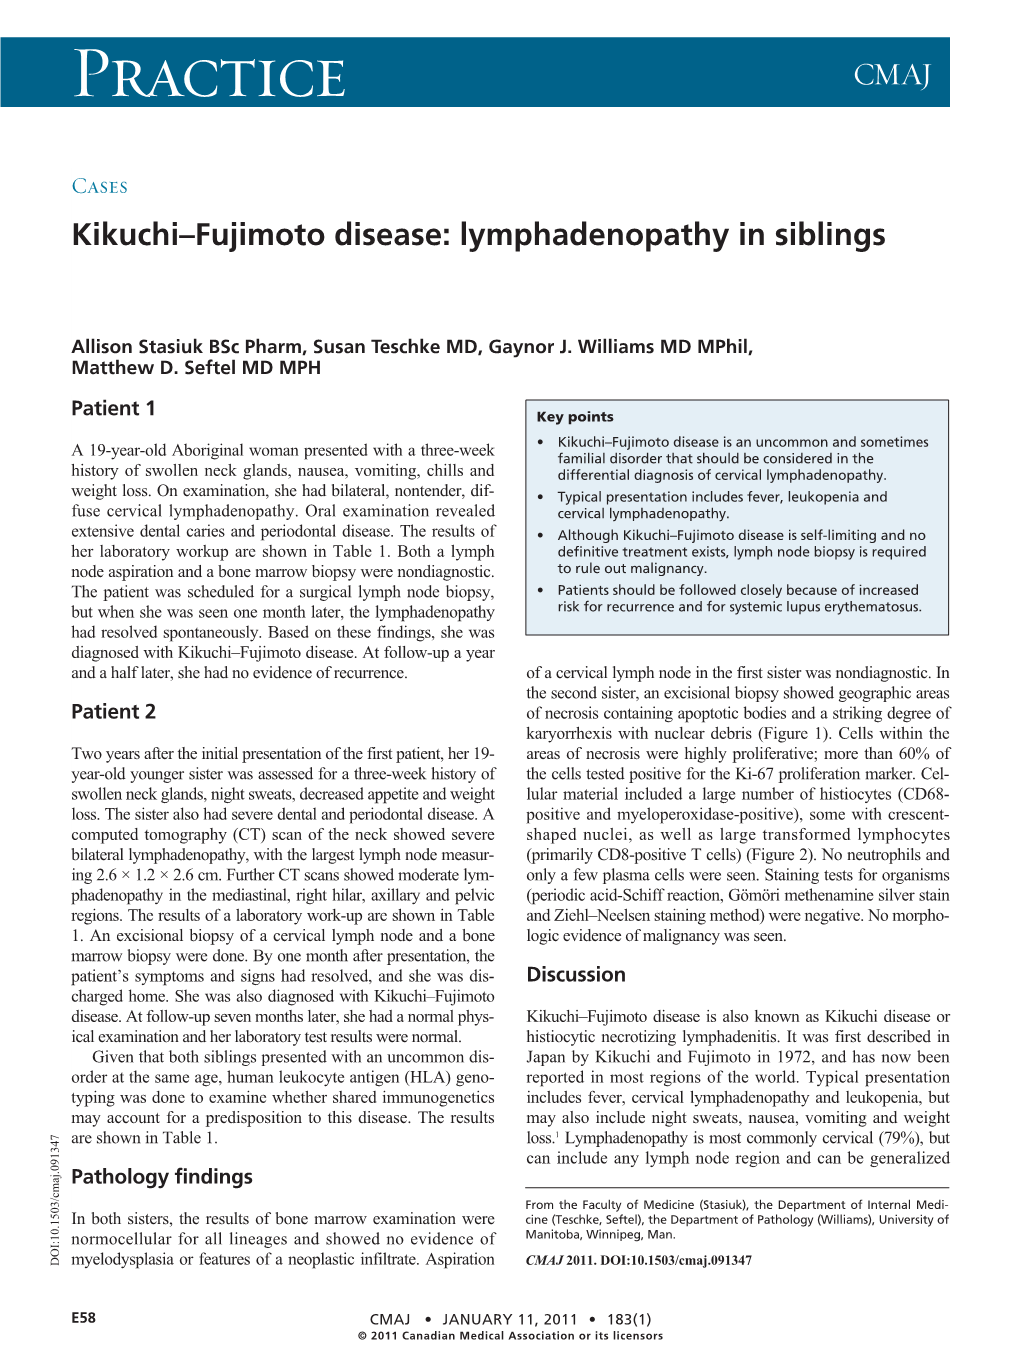 Kikuchi–Fujimoto Disease: Lymphadenopathy in Siblings